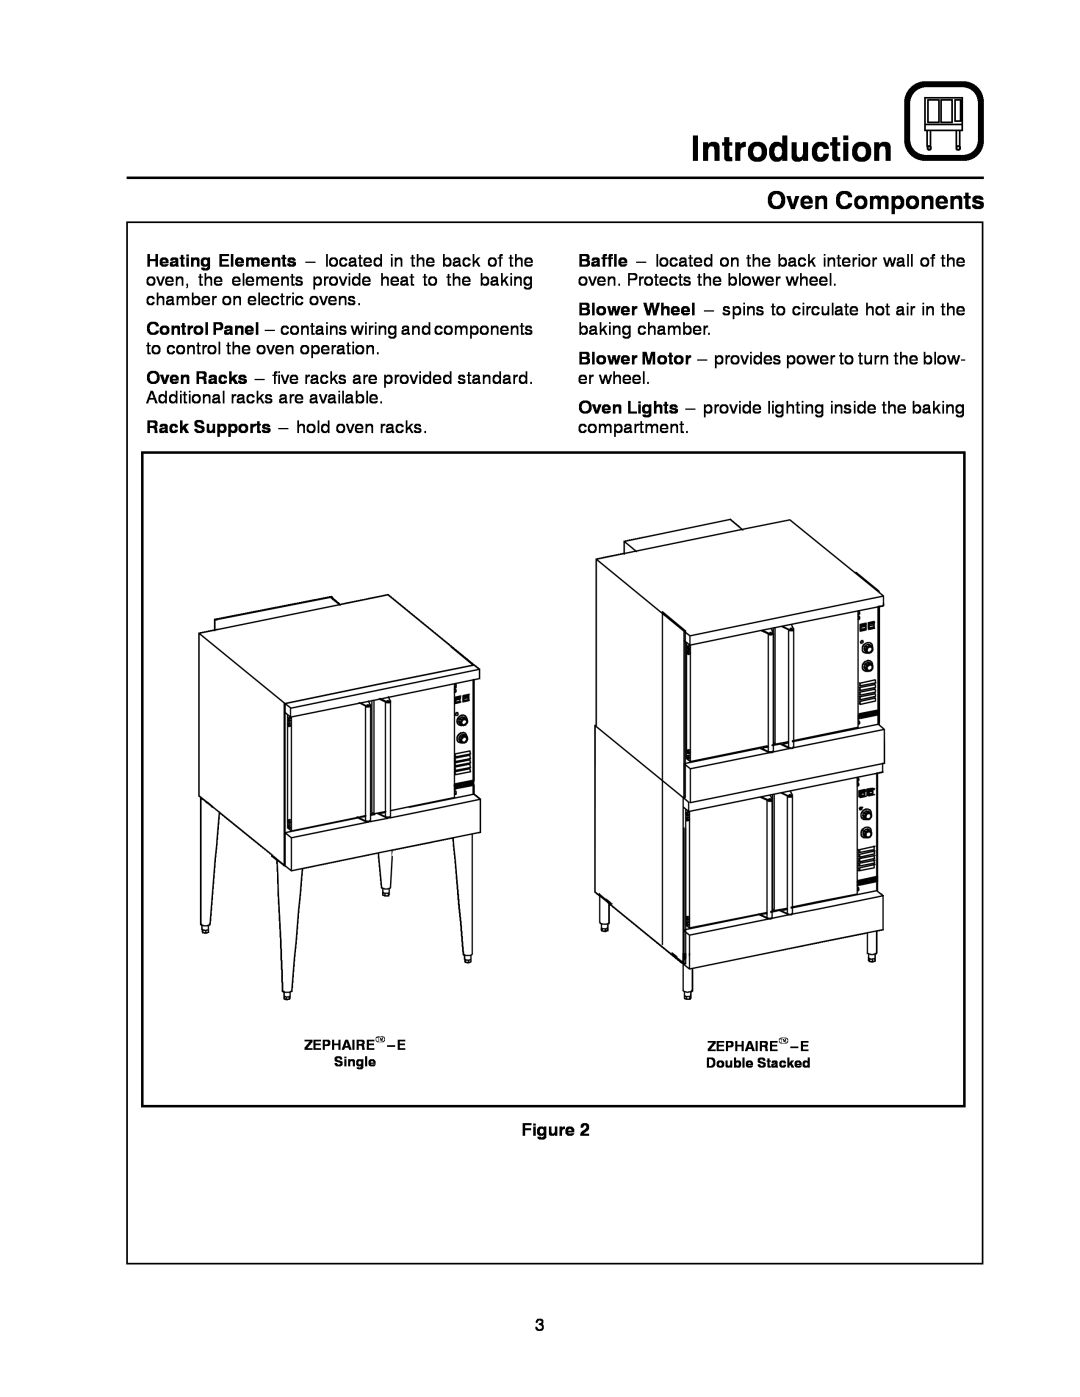 Blodgett ZEPHAIRE-E manual Introduction, Oven Components 